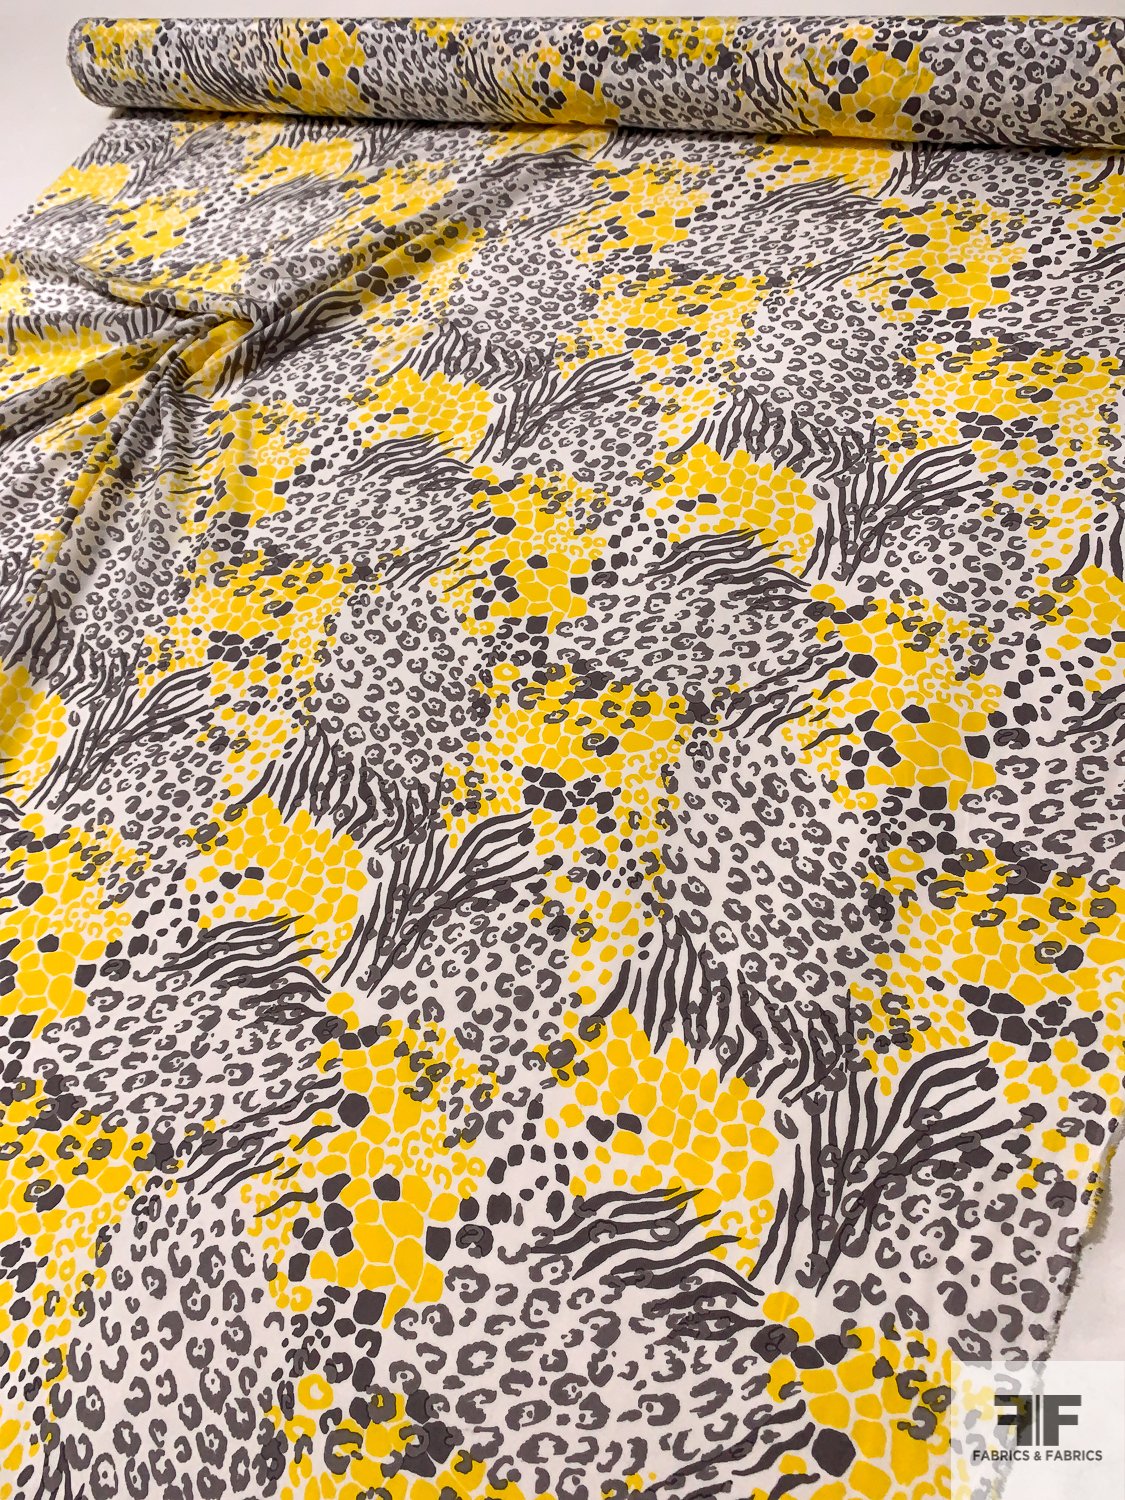 Wavy Animal Pattern Collage Printed Silk Crepe de Chine - Yellow / Grey / White